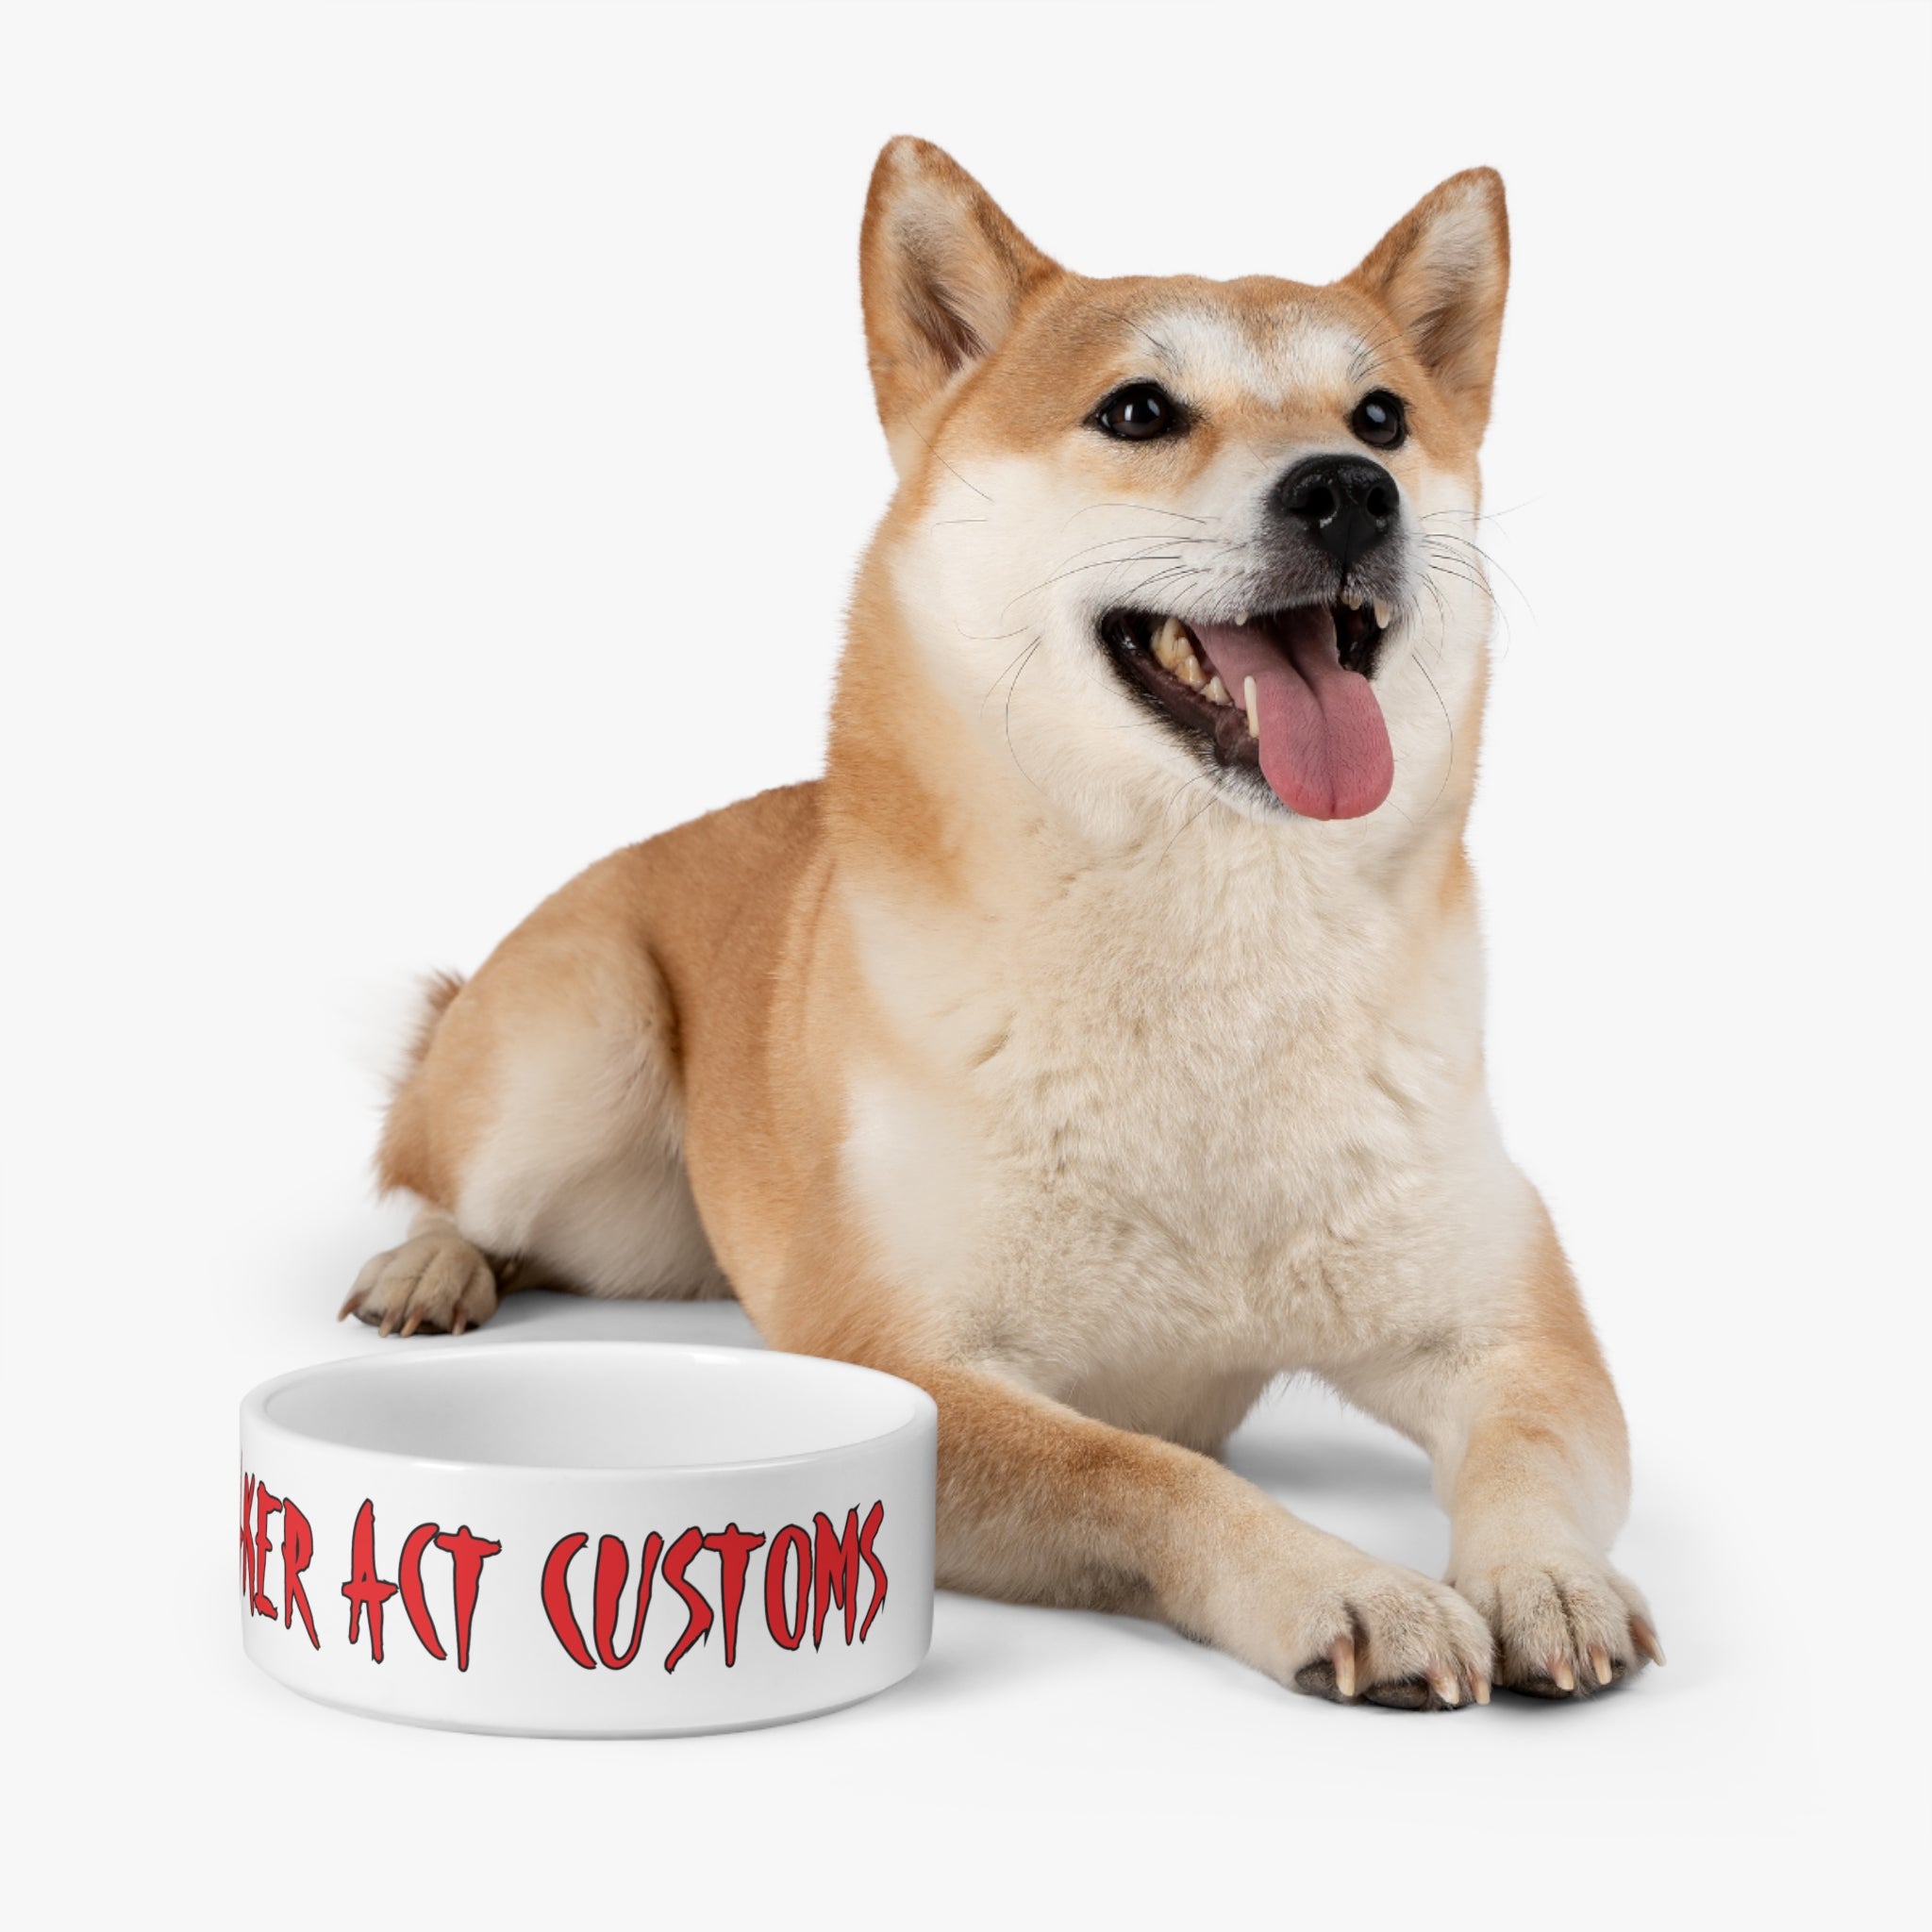 Baker Act Customs Pet Bowl